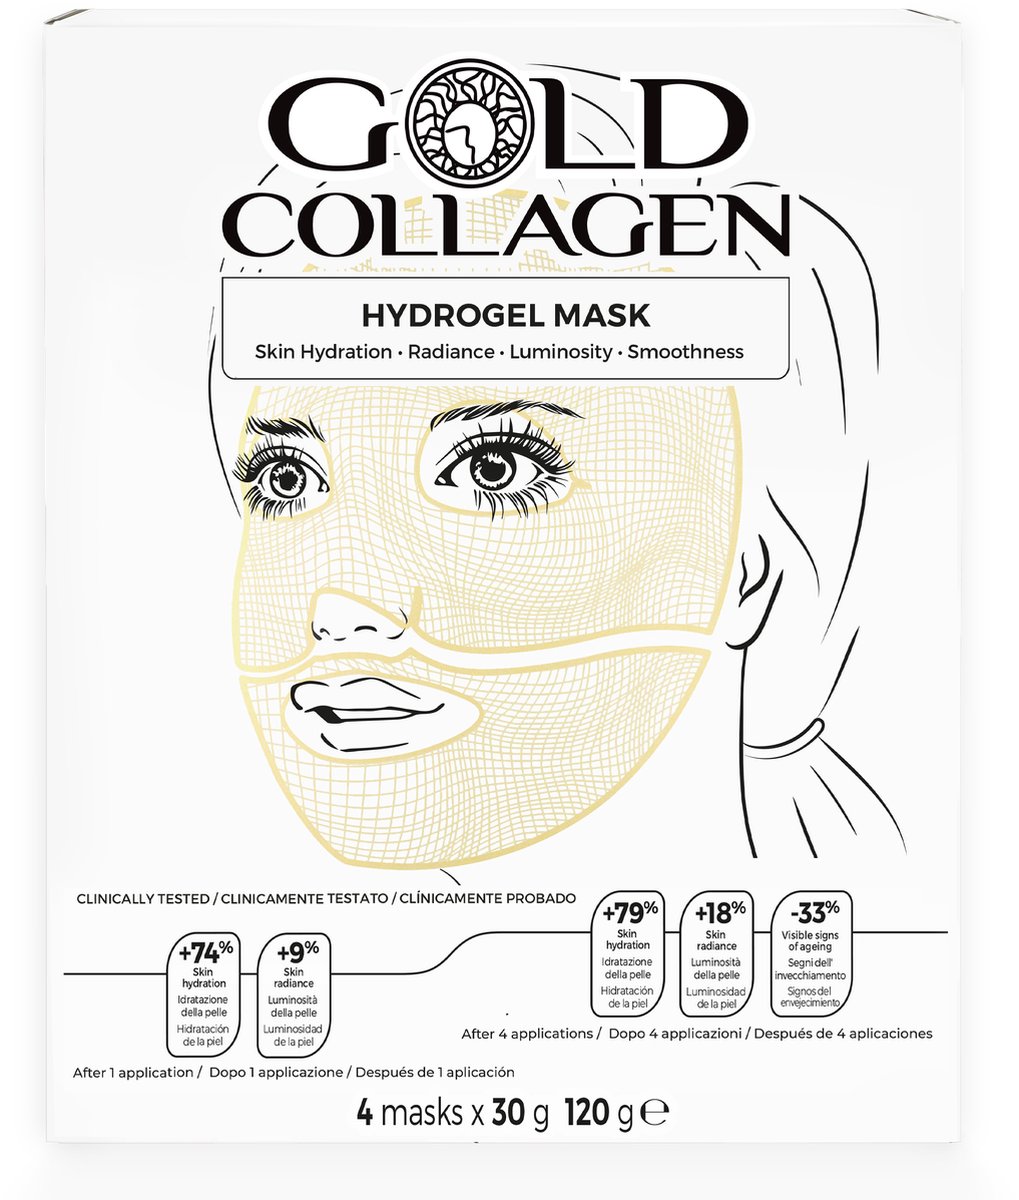 Gold Collagen Hydrogel Mask (4 maskers/doos op basis van 